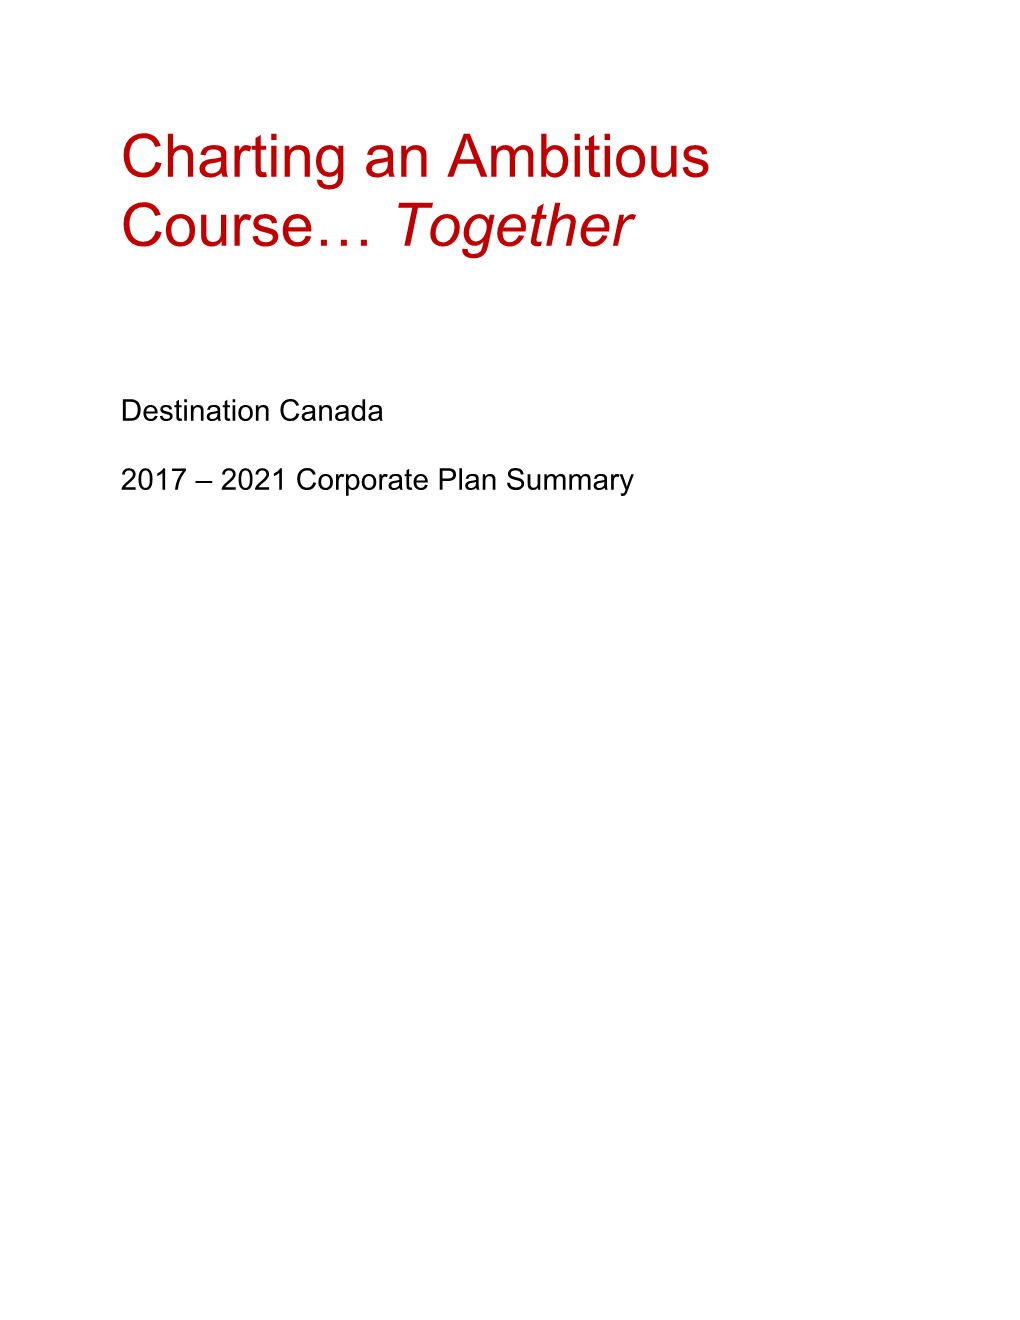 Destination Canada Corporate Plan